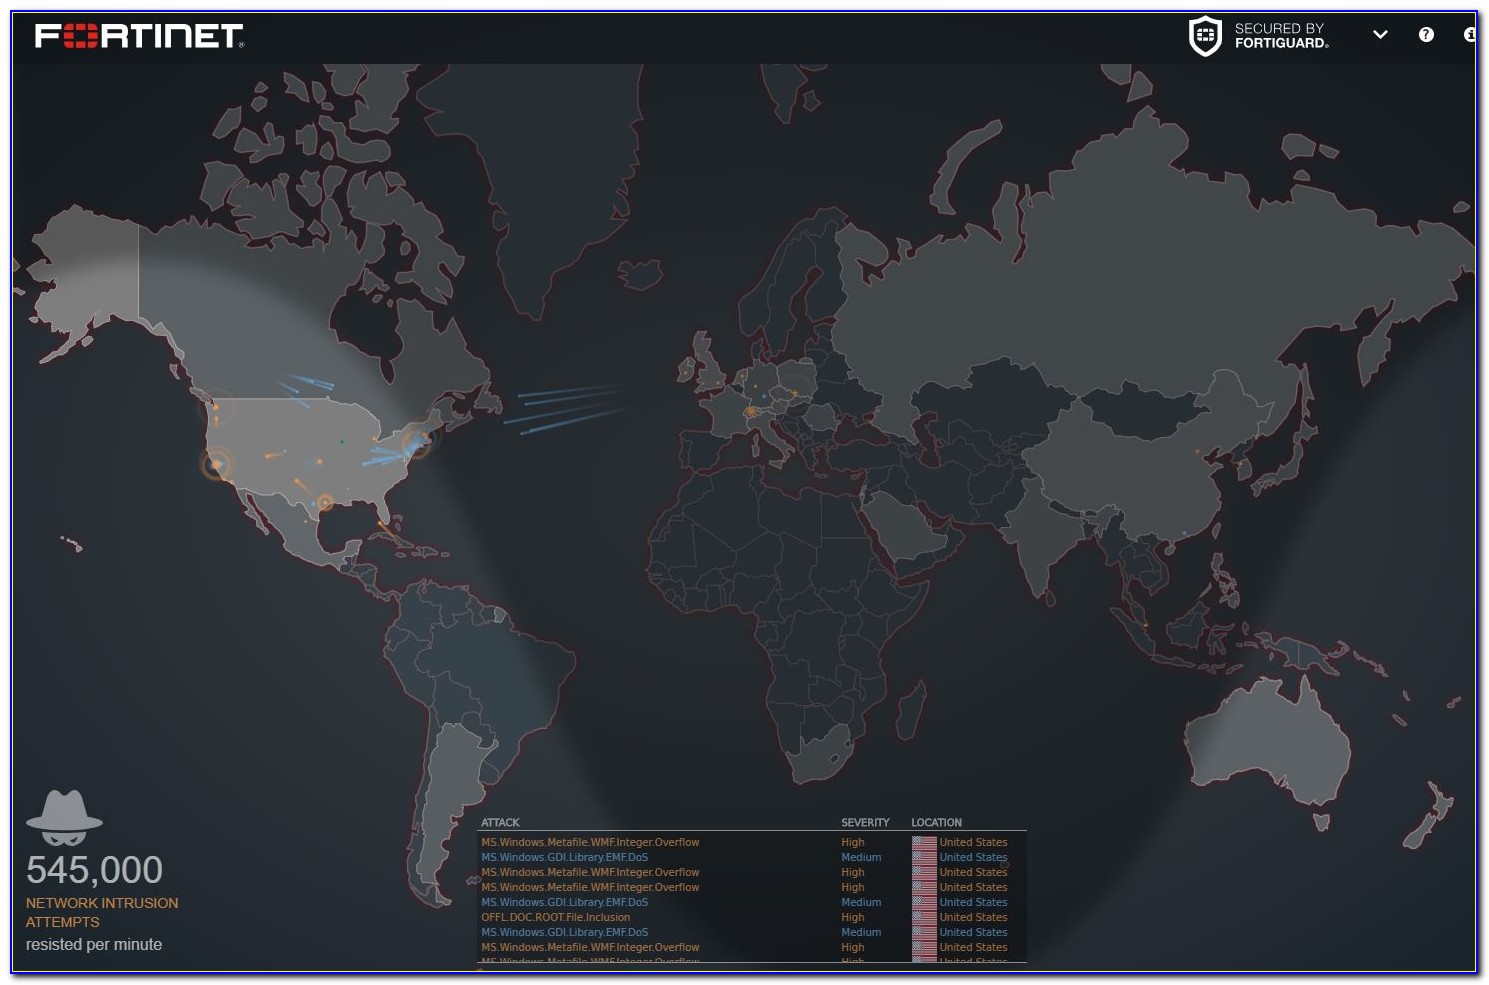 Fortinet Threat Map Analysis